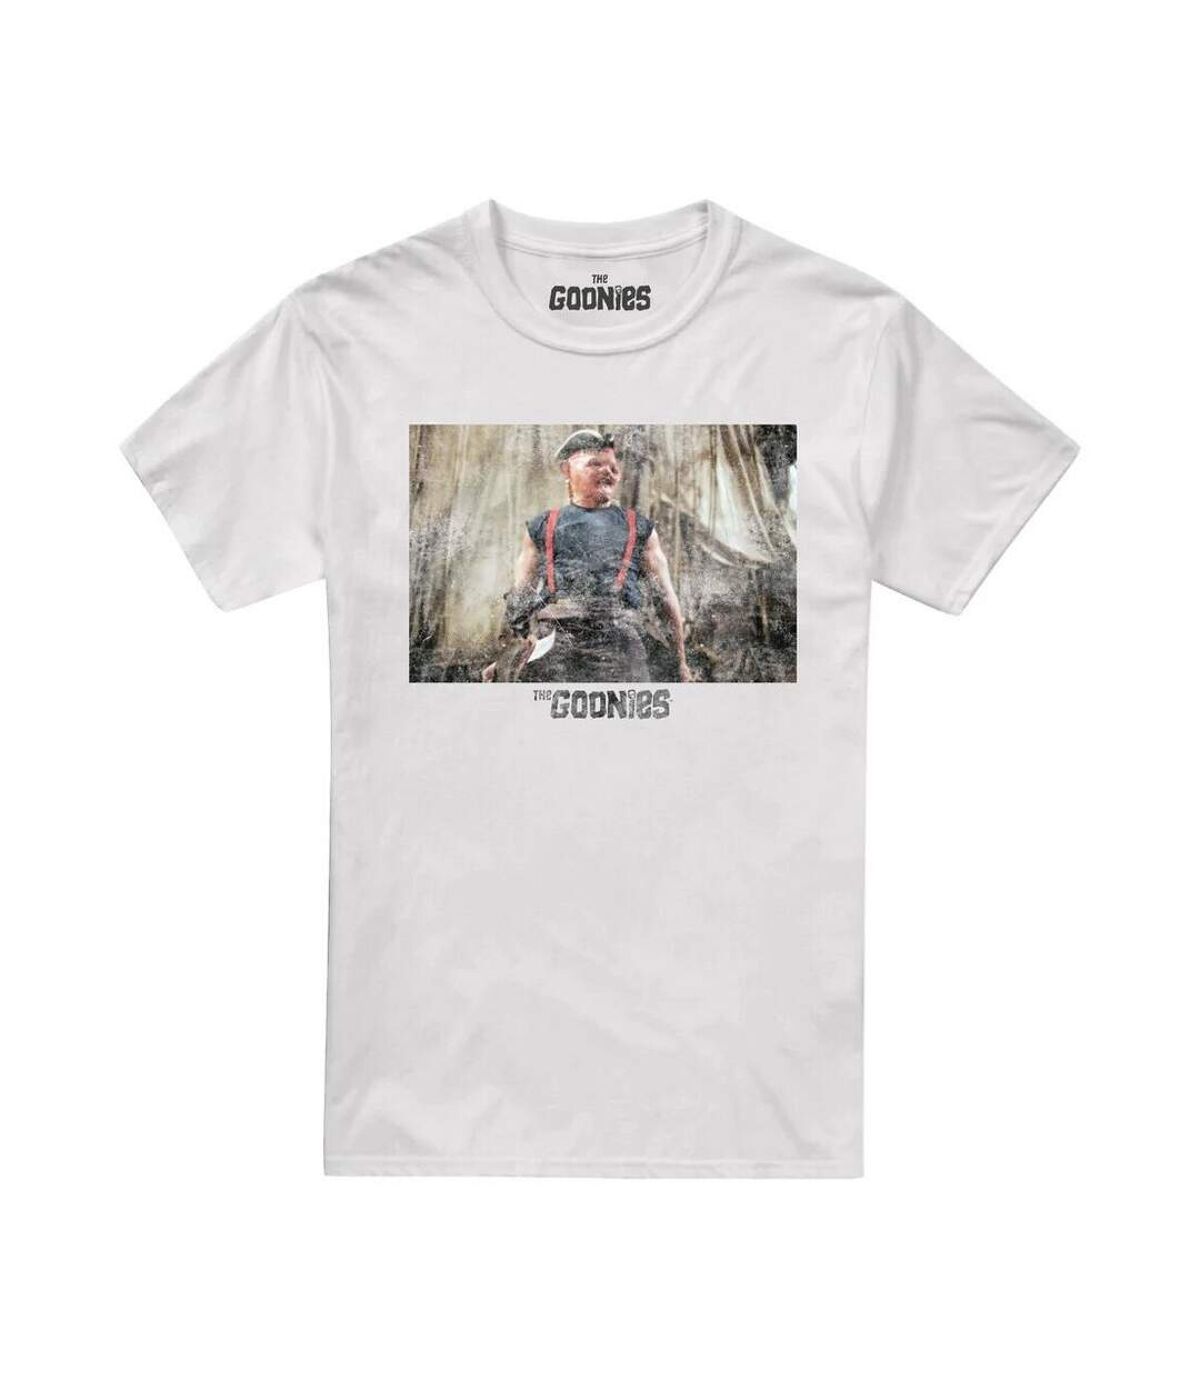 The Goonies Mens Sloth T-Shirt (Blanc) - UTTV605